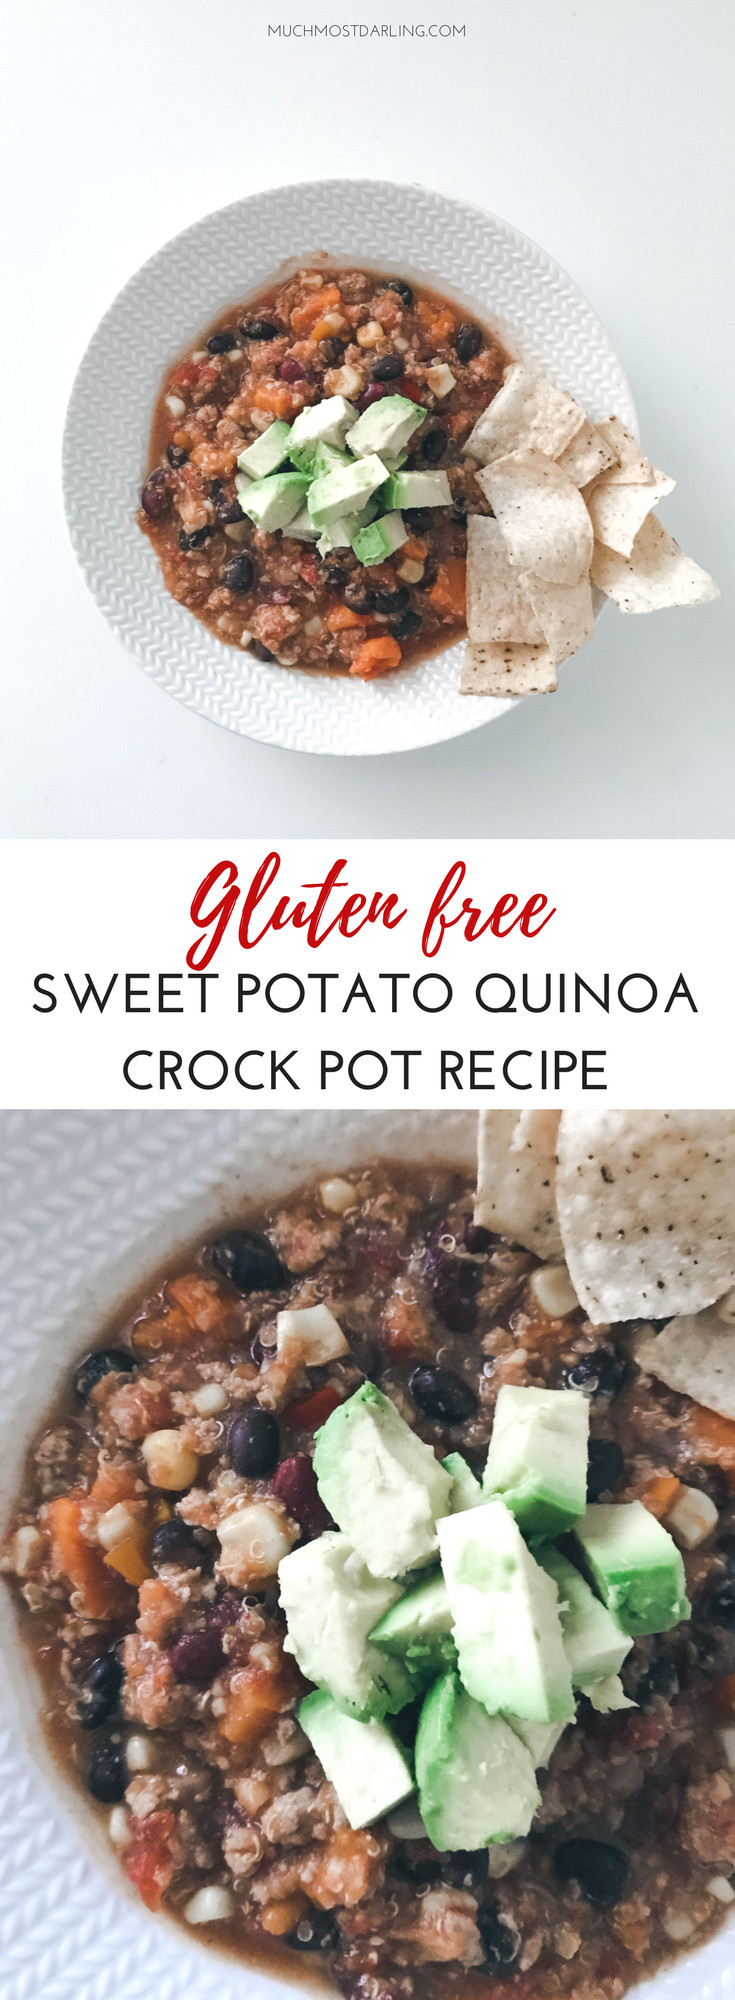 Healthy Gluten Free Crock Pot Recipes
 Gluten Free Crockpot Recipe Sweet Potato & Ground Turkey